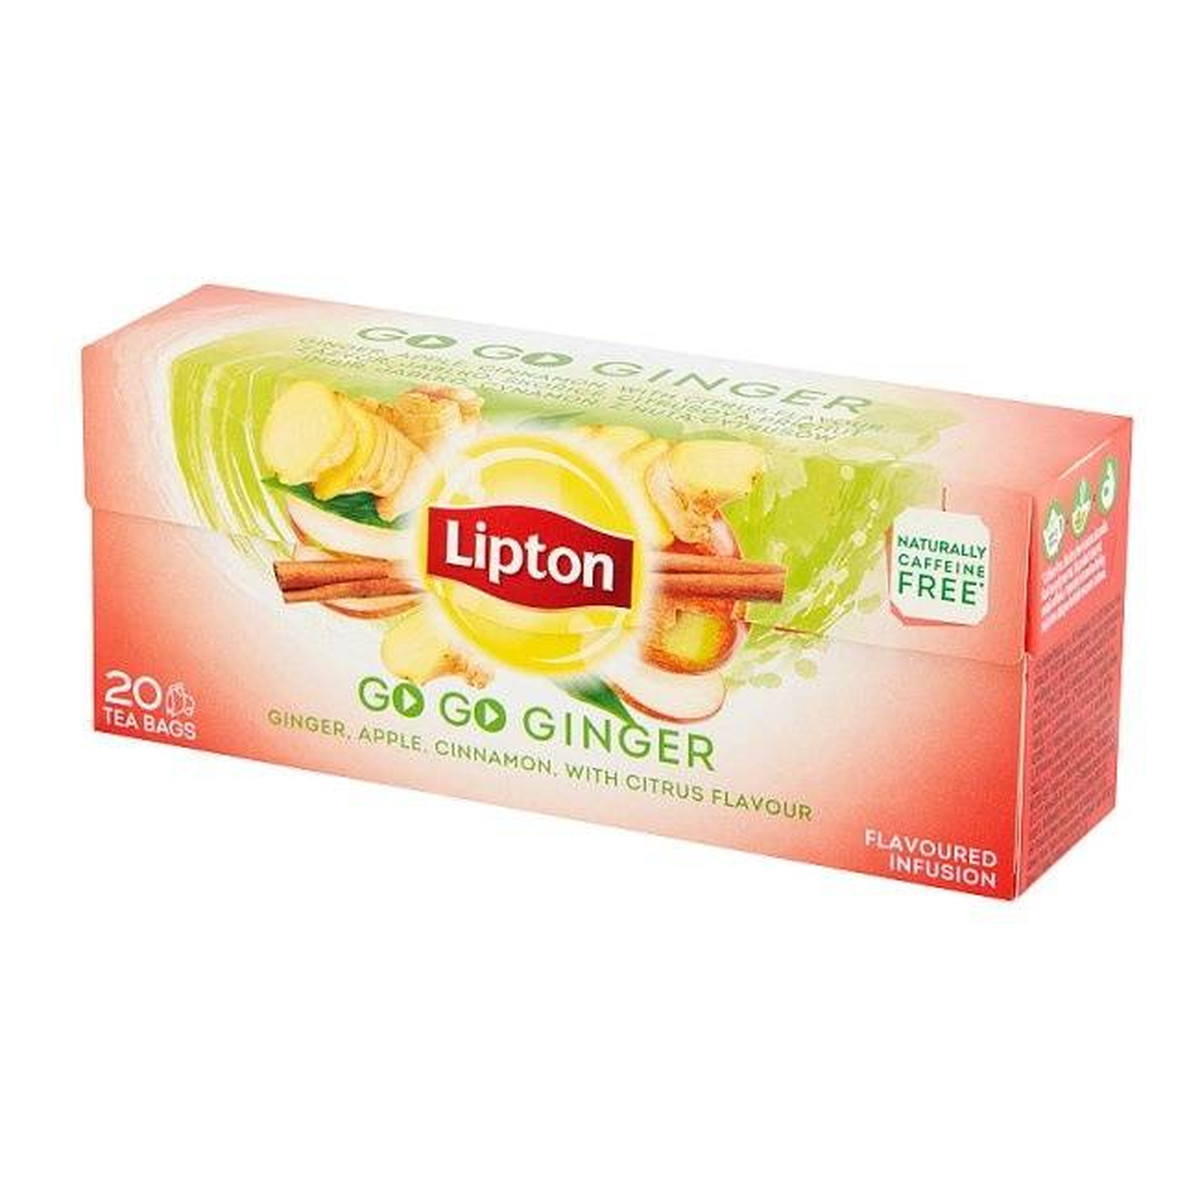 Lipton Go Go Ginger Herbata owocowa 20 torebek 32g